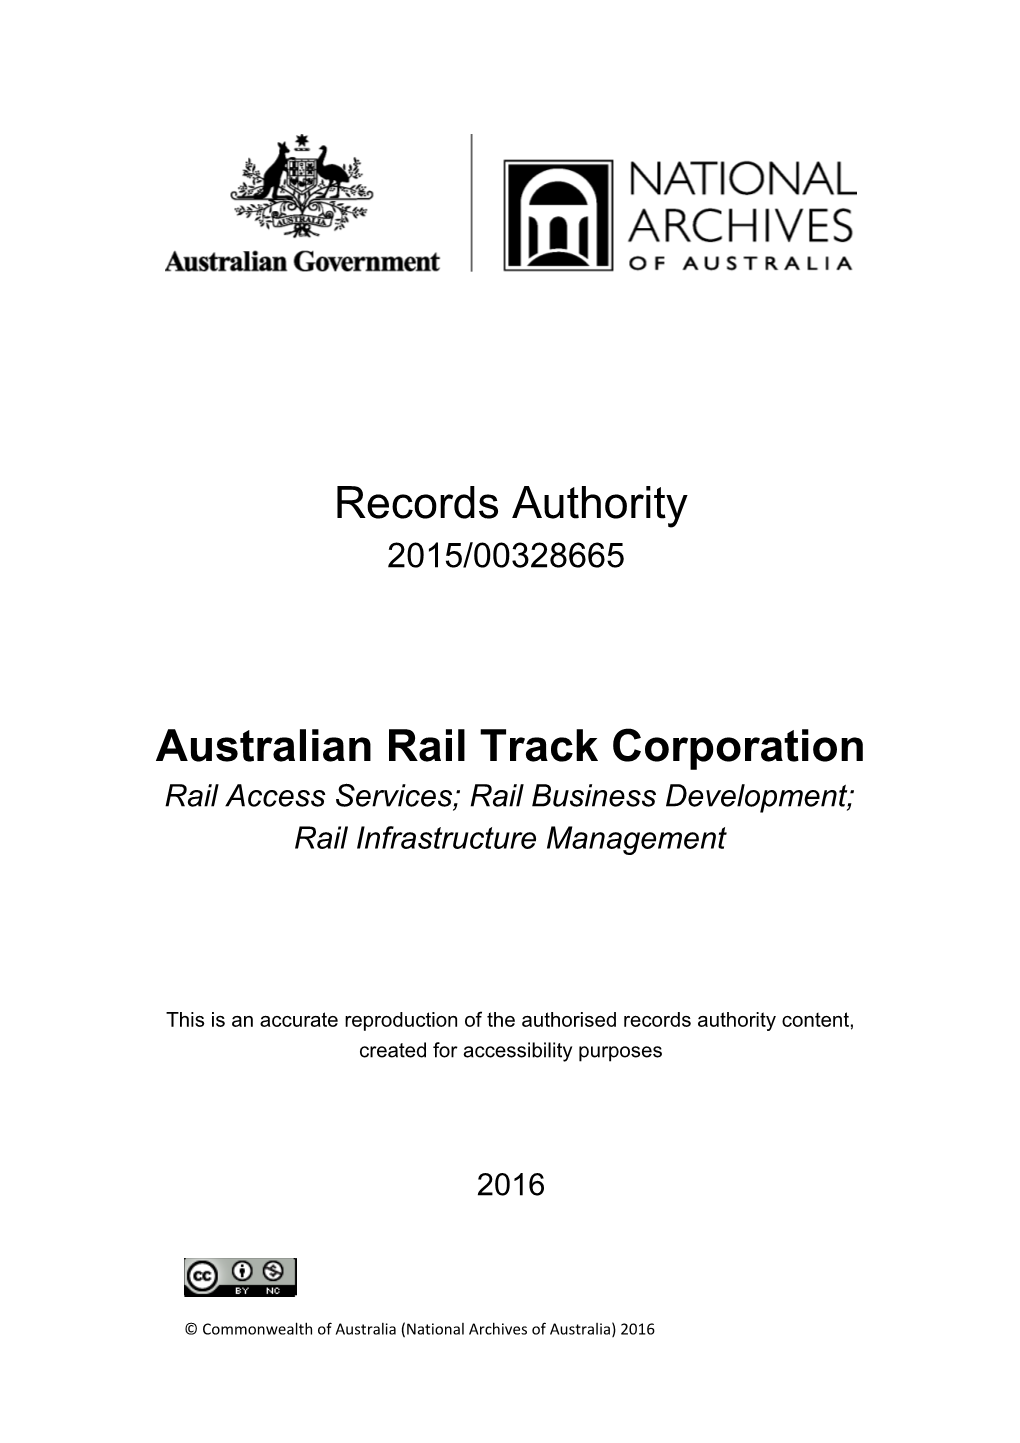 Australian Rail Track Corporation (ARTC) - Record Authority - 2015/00328665